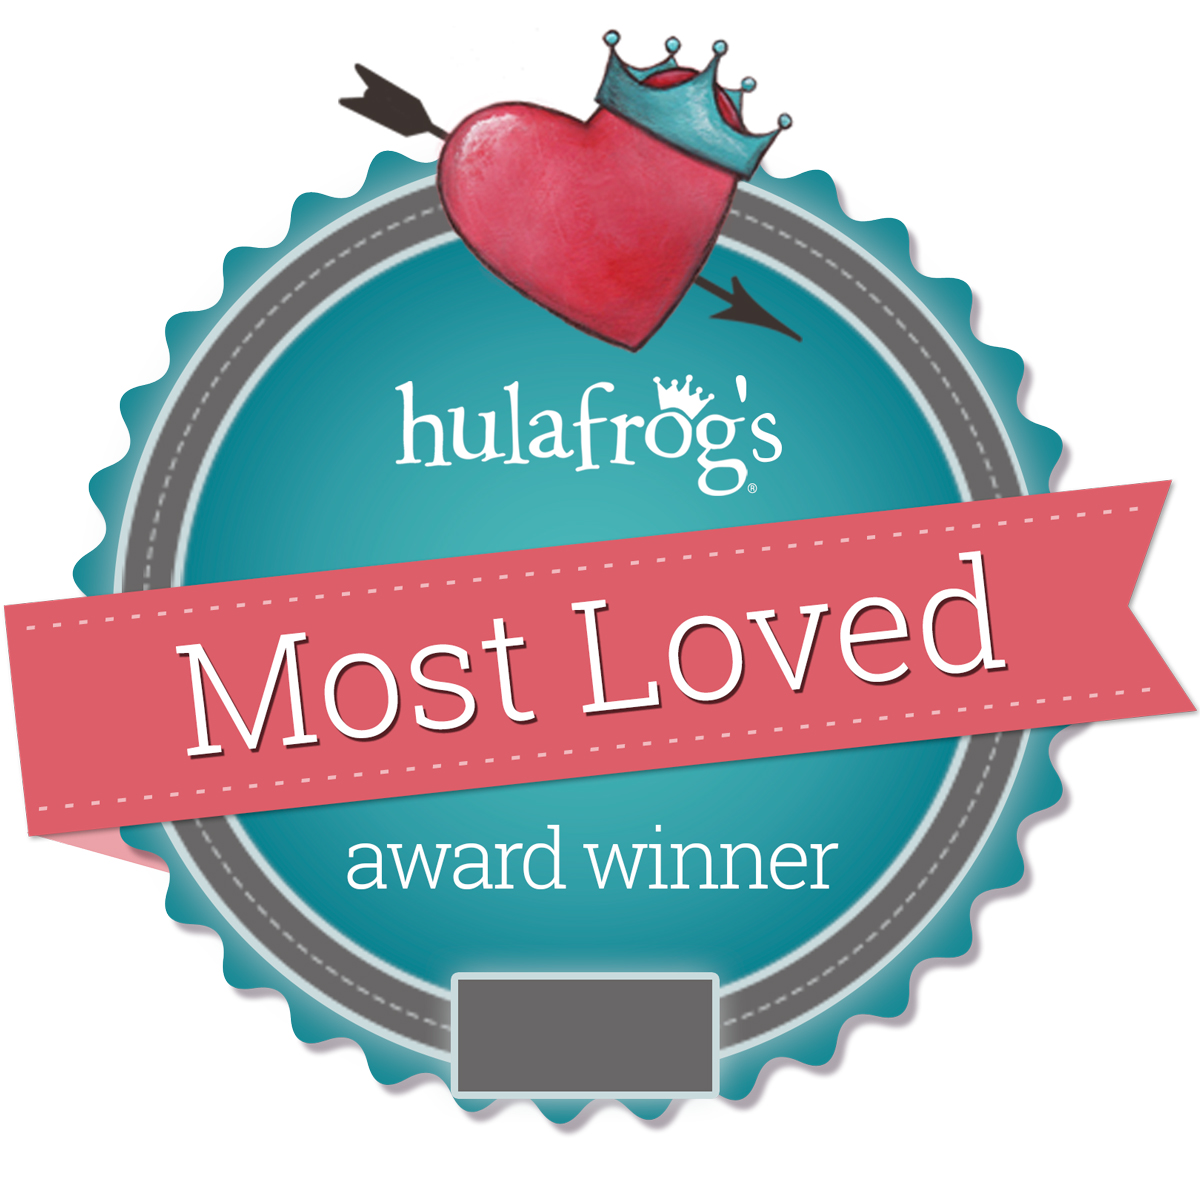 Nature Preschool won Most Loved award from Hulafrog